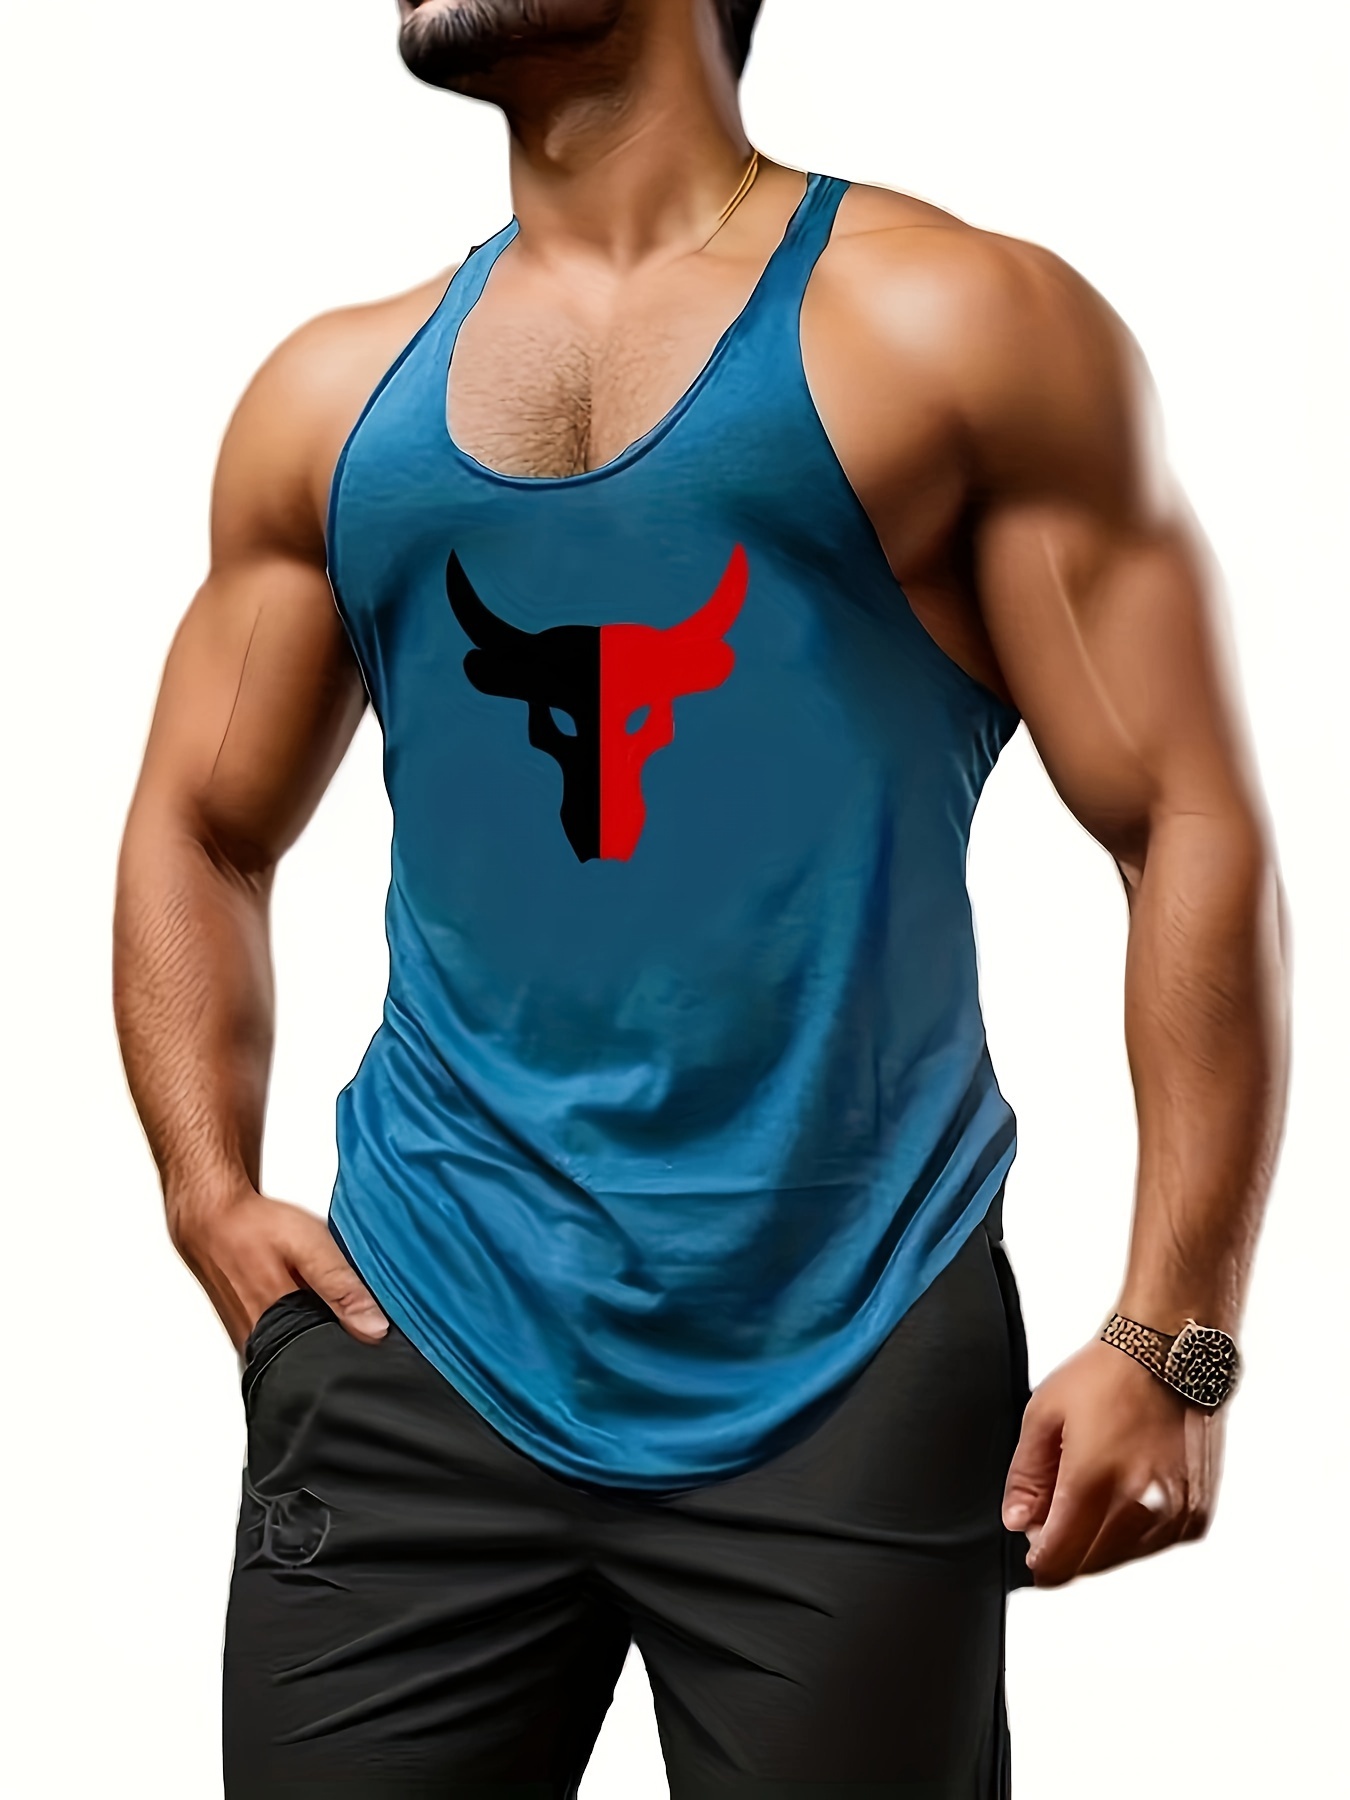 Men Workout Tank Top Sleeveless Gym Shirts Bodybuilding Fitness